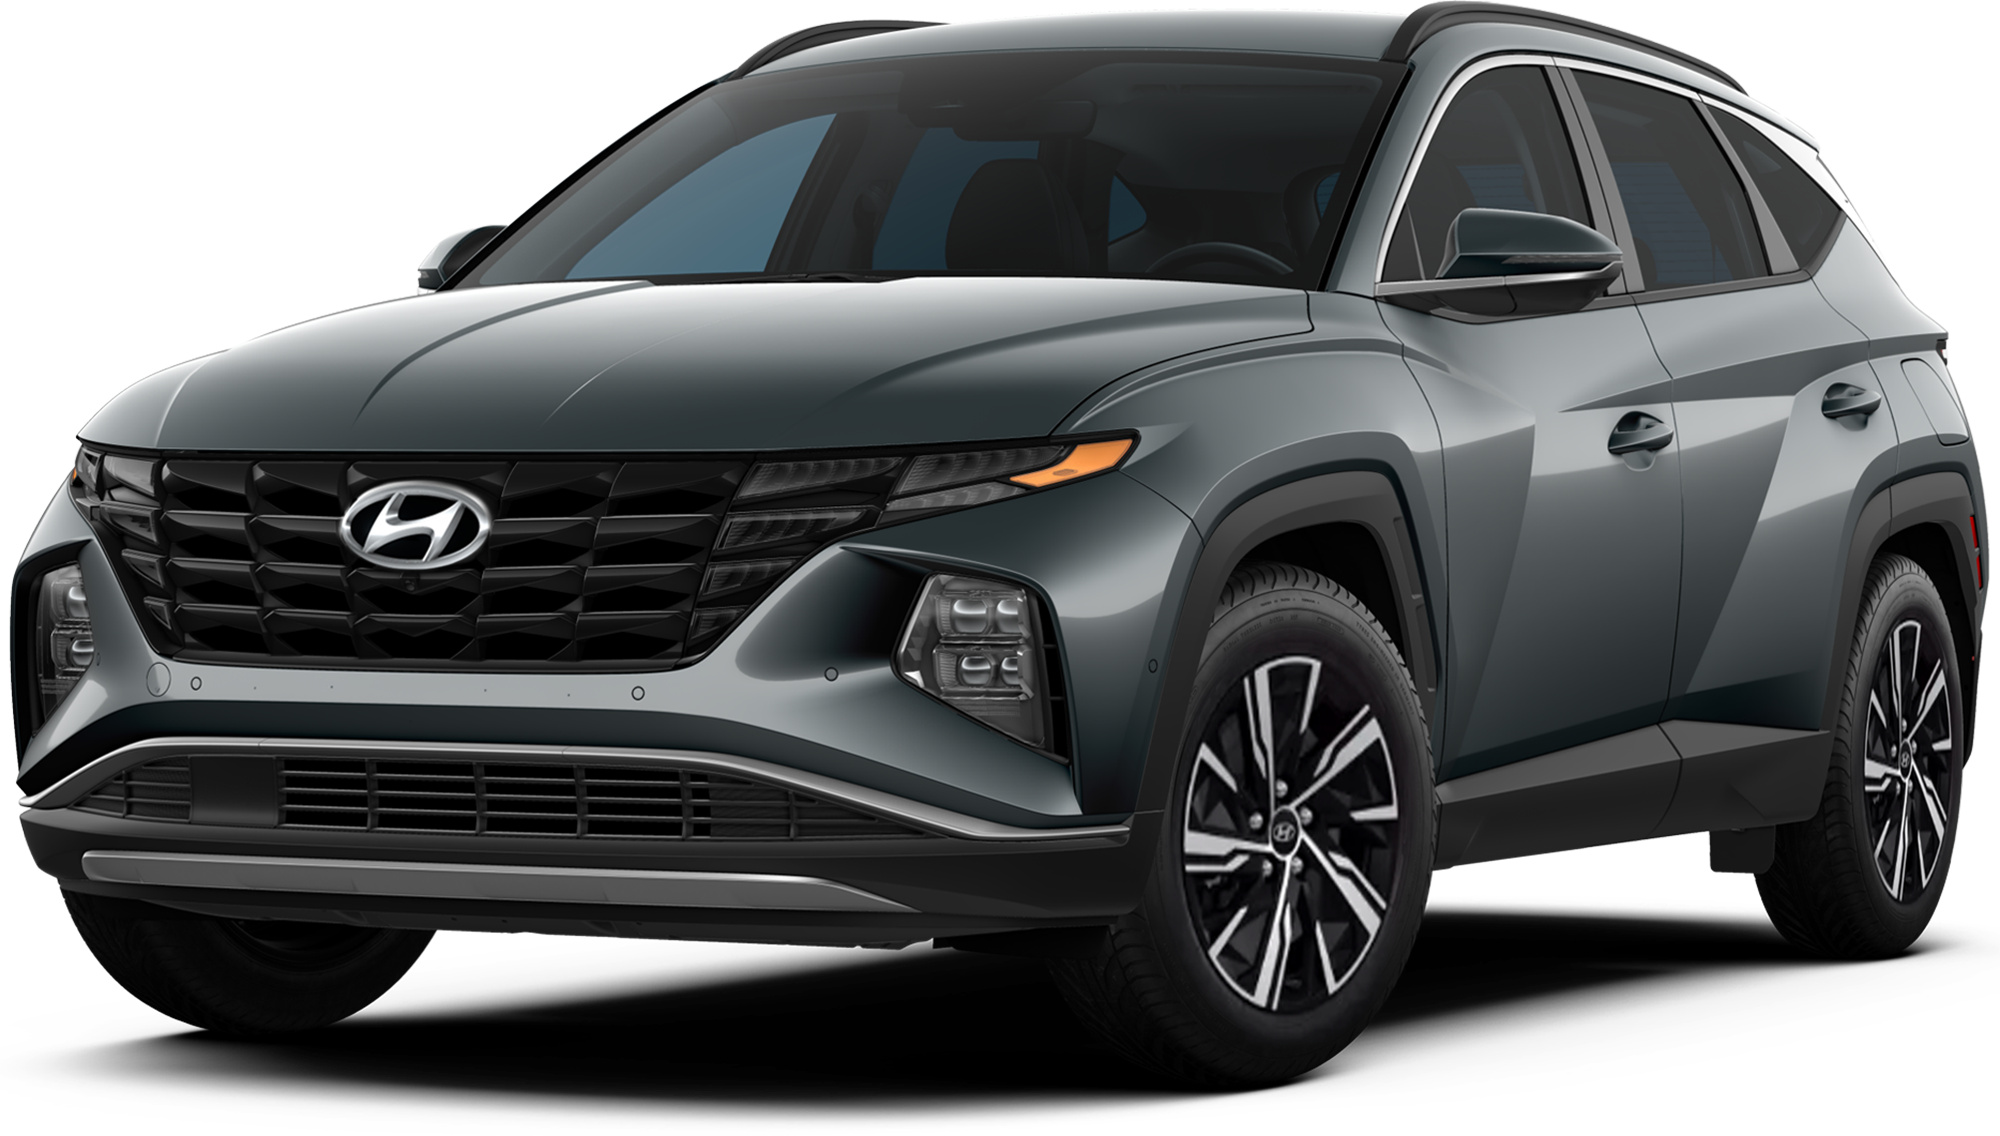 https://images.dealer.com/ddc/vehicles/2023/Hyundai/Tucson%20Hybrid/SUV/perspective/front-left/2023_24.png